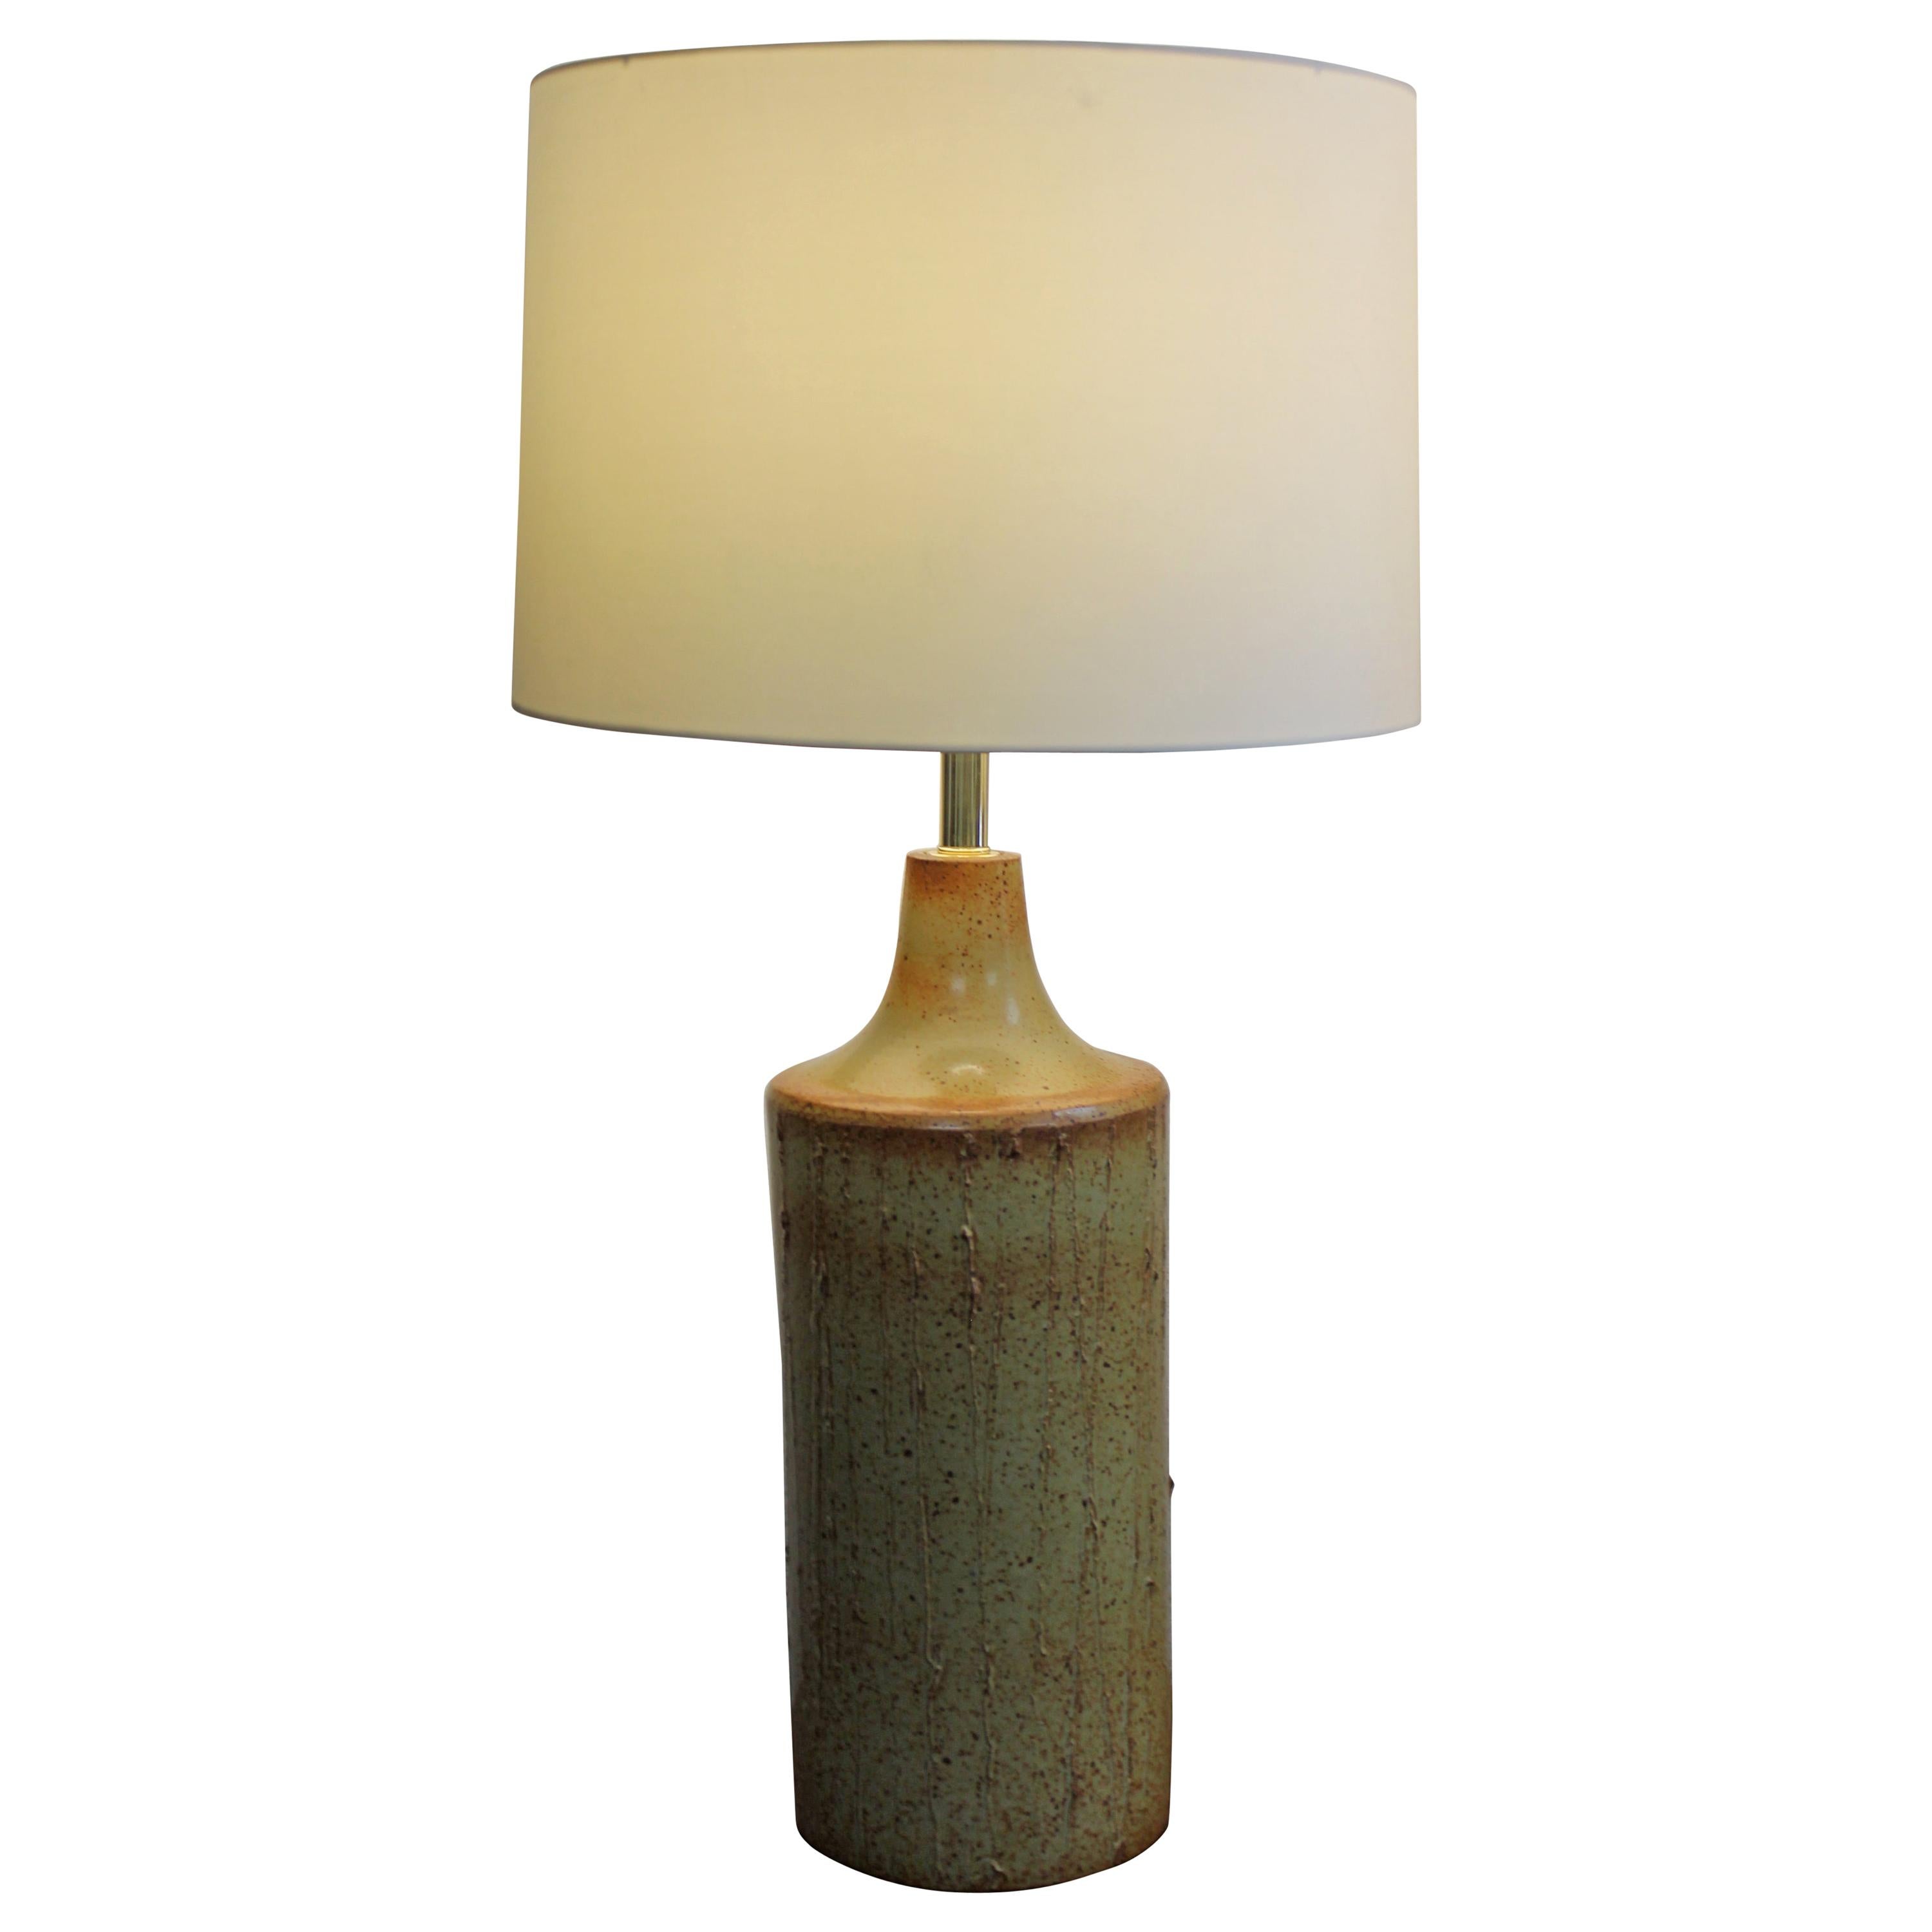 David Cressey Lamp For Sale